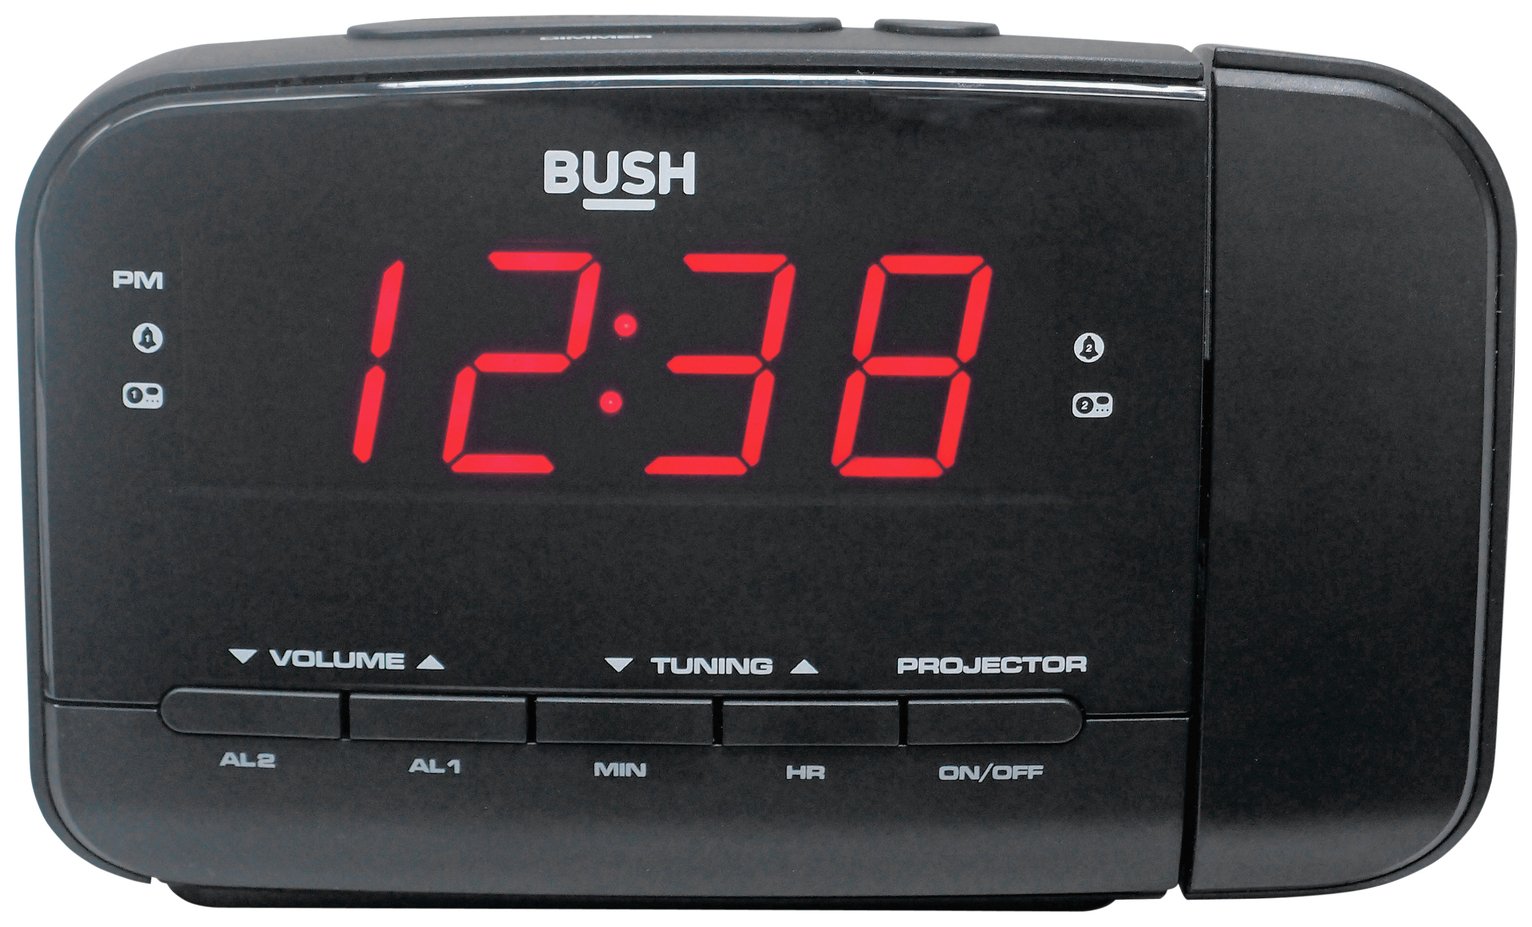 Bush Projection Alarm Clock - Black 